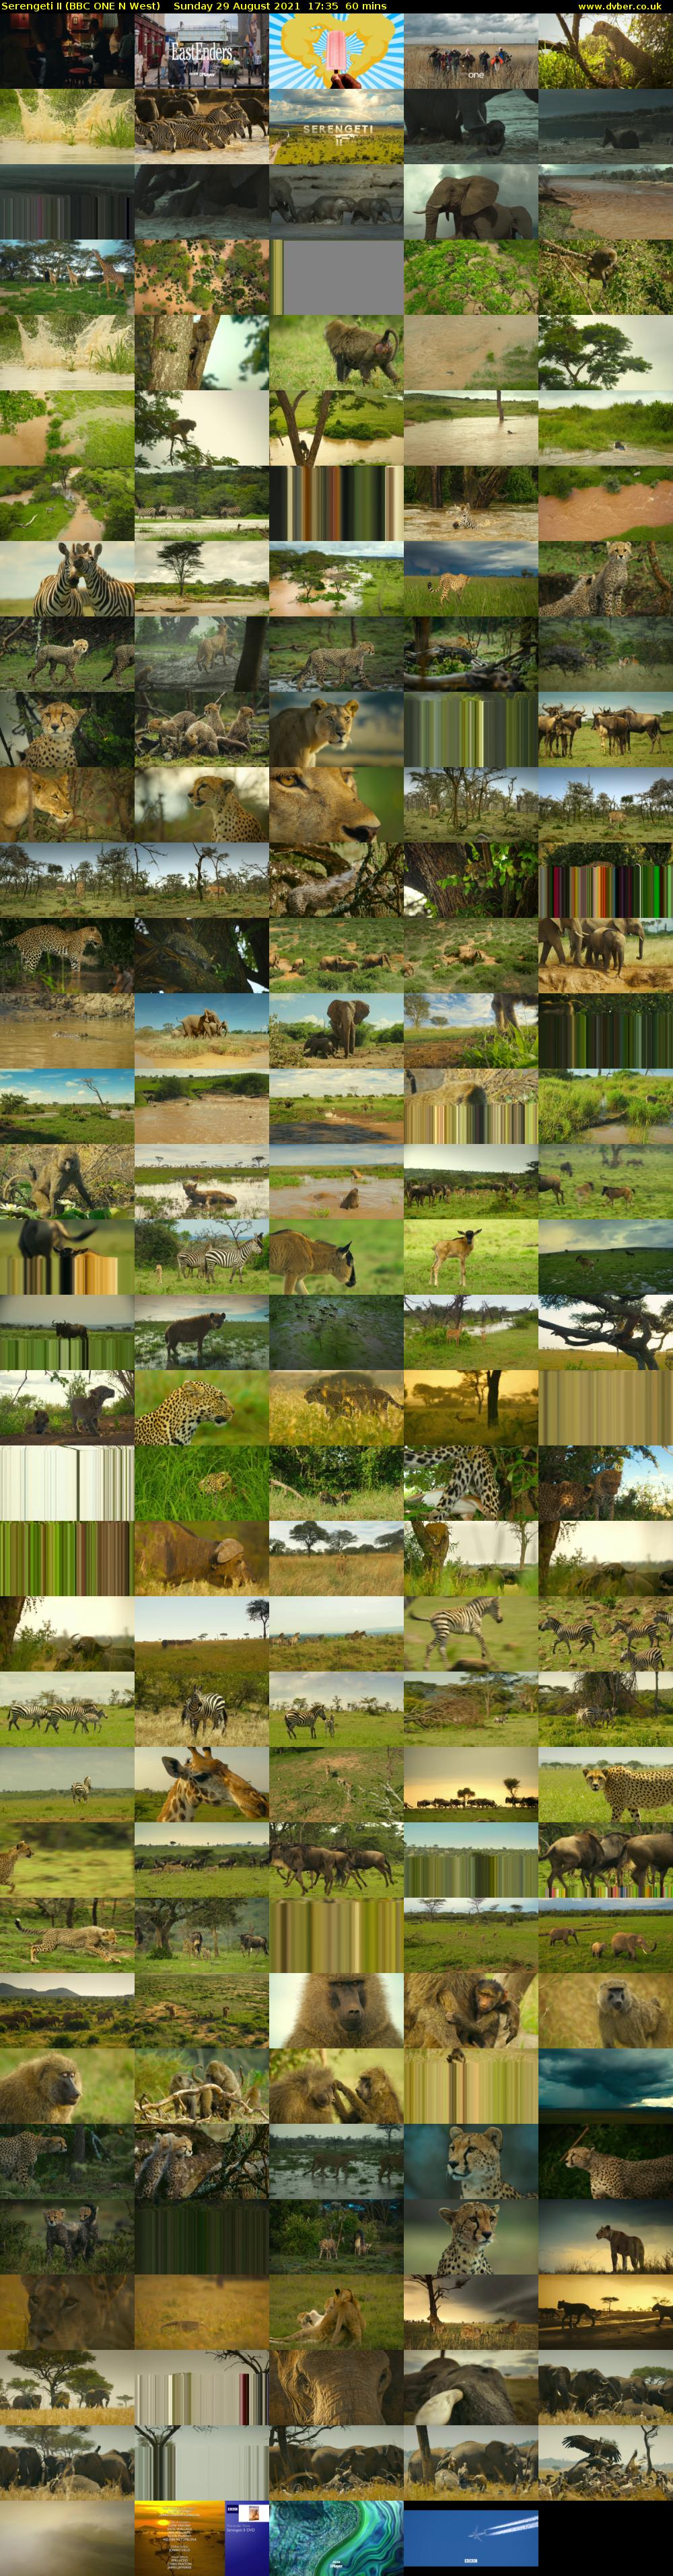 Serengeti II (BBC ONE N West) Sunday 29 August 2021 17:35 - 18:35